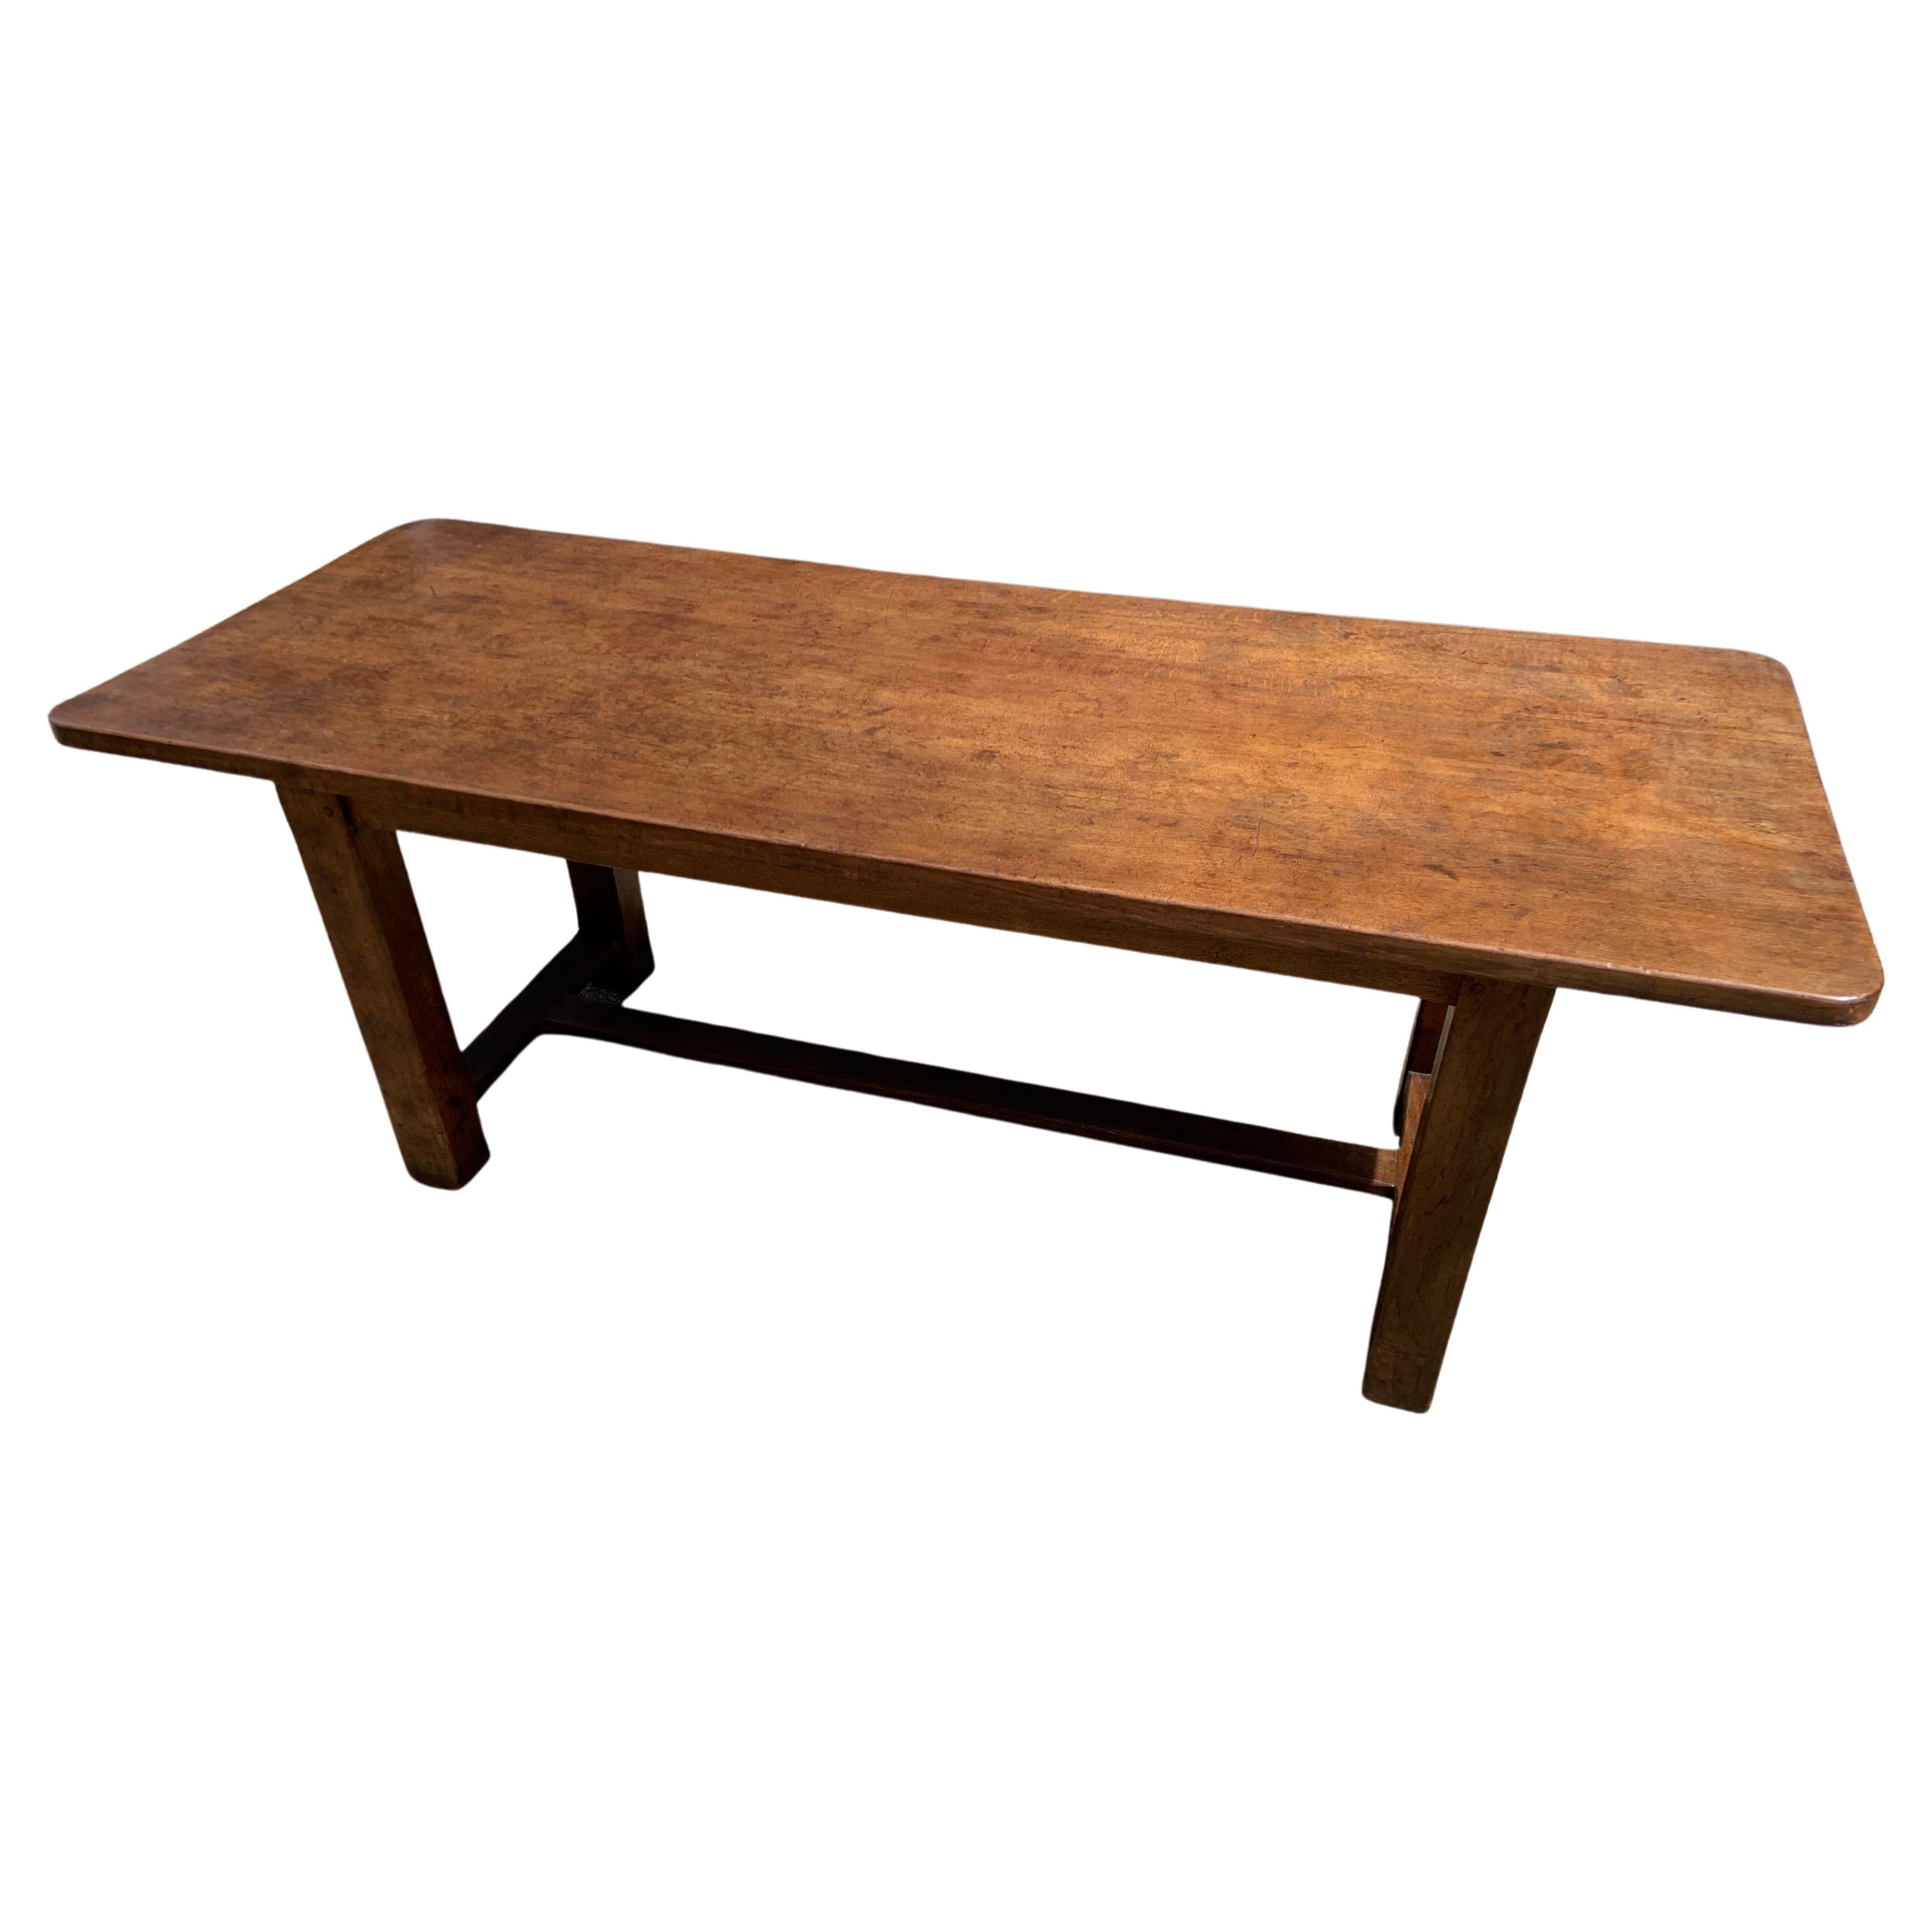 Early 20th Century Oak Farmhouse Table For Sale